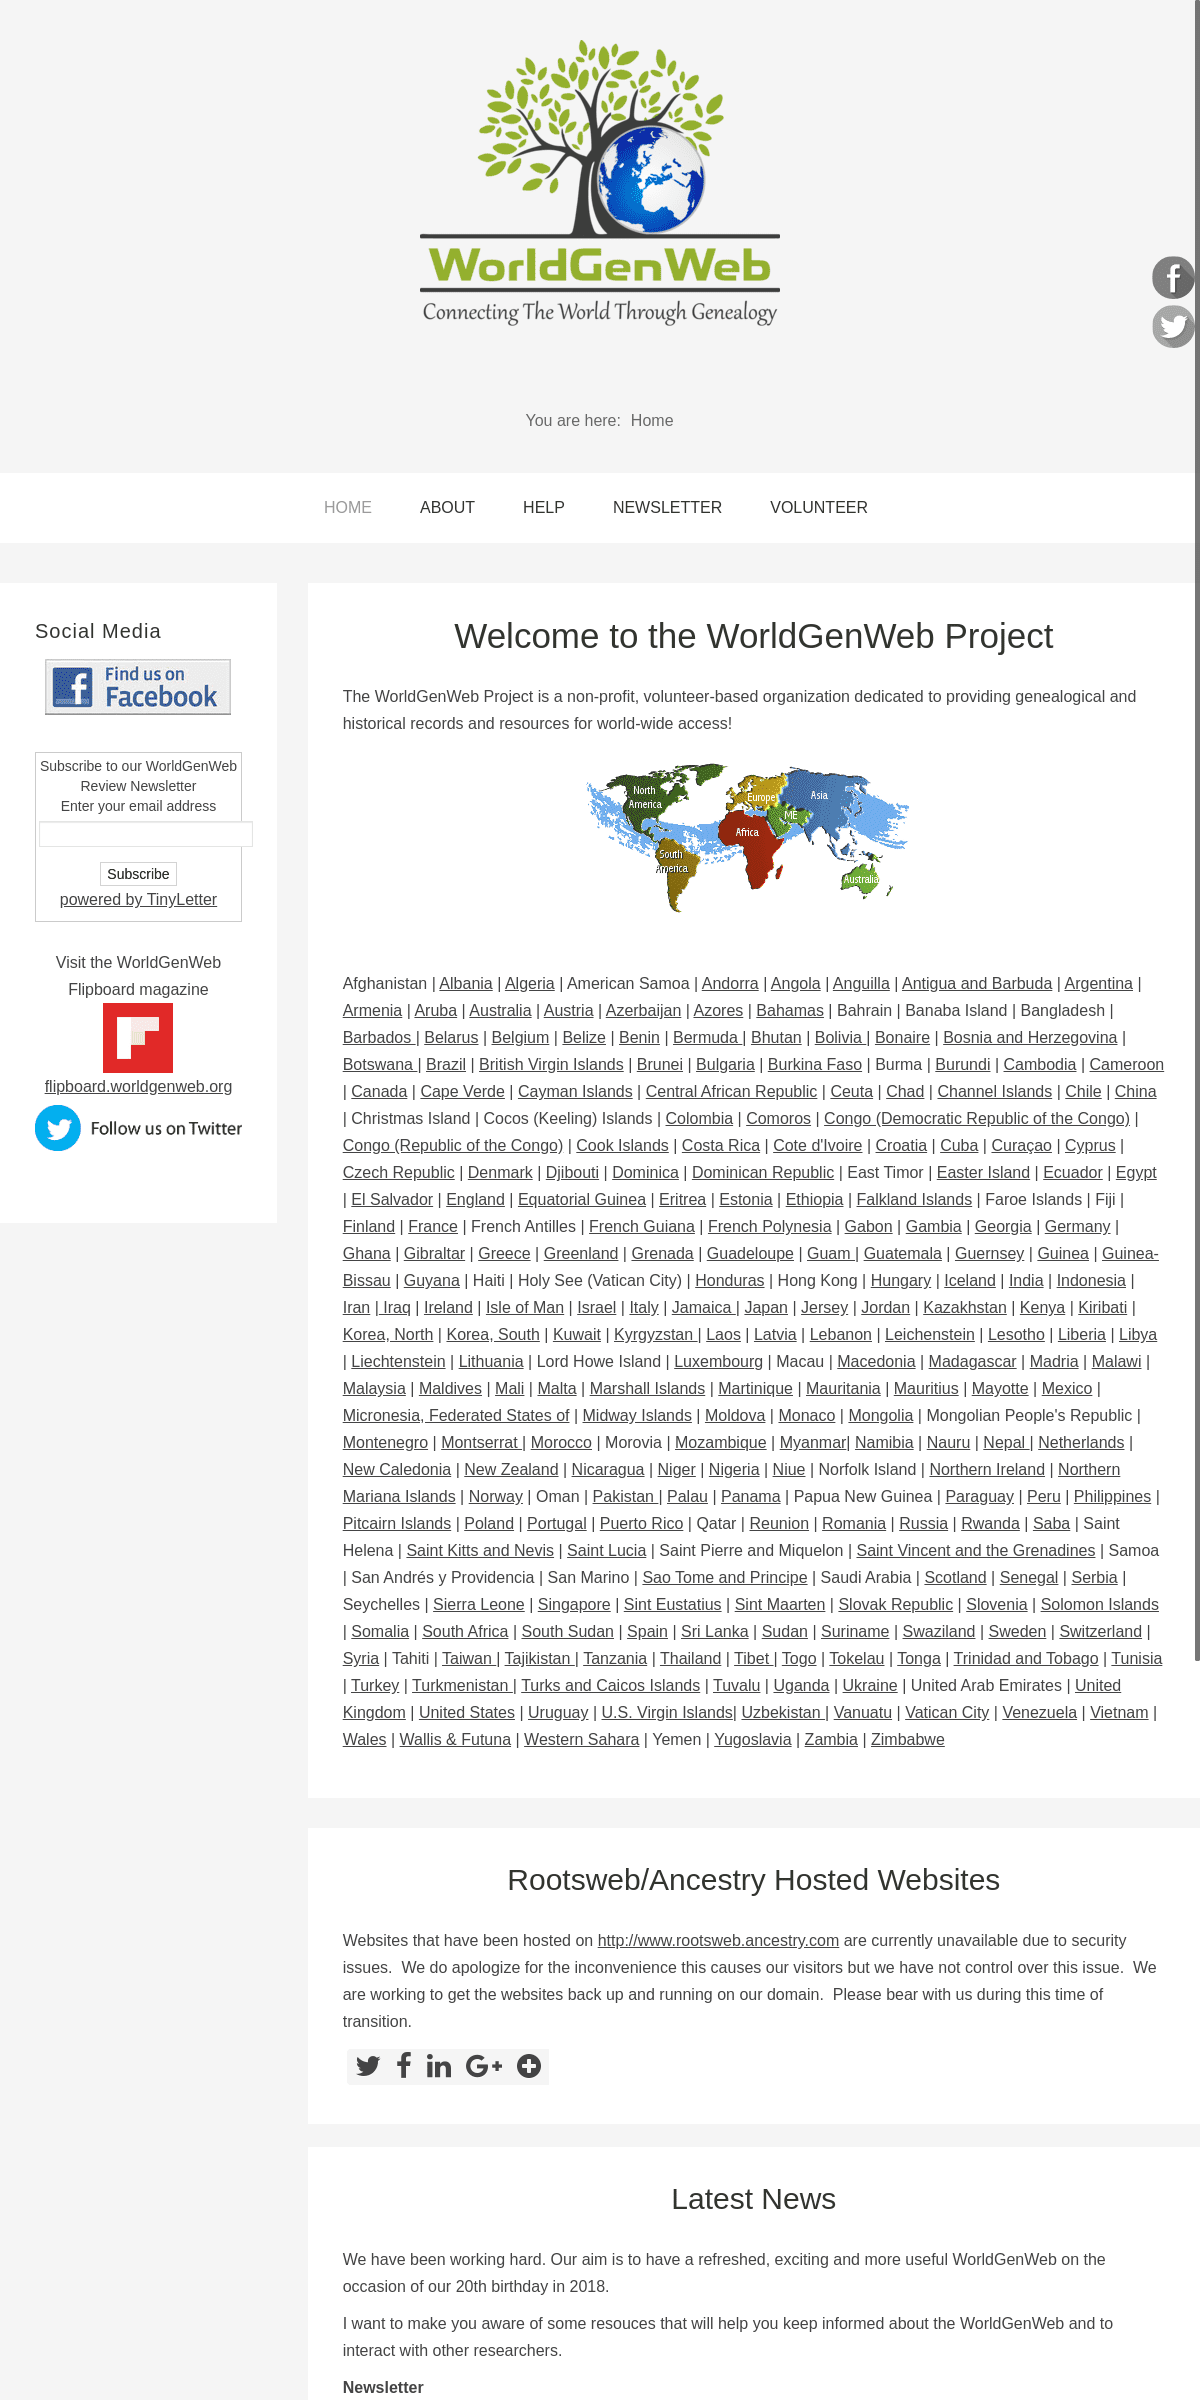 A complete backup of worldgenweb.org